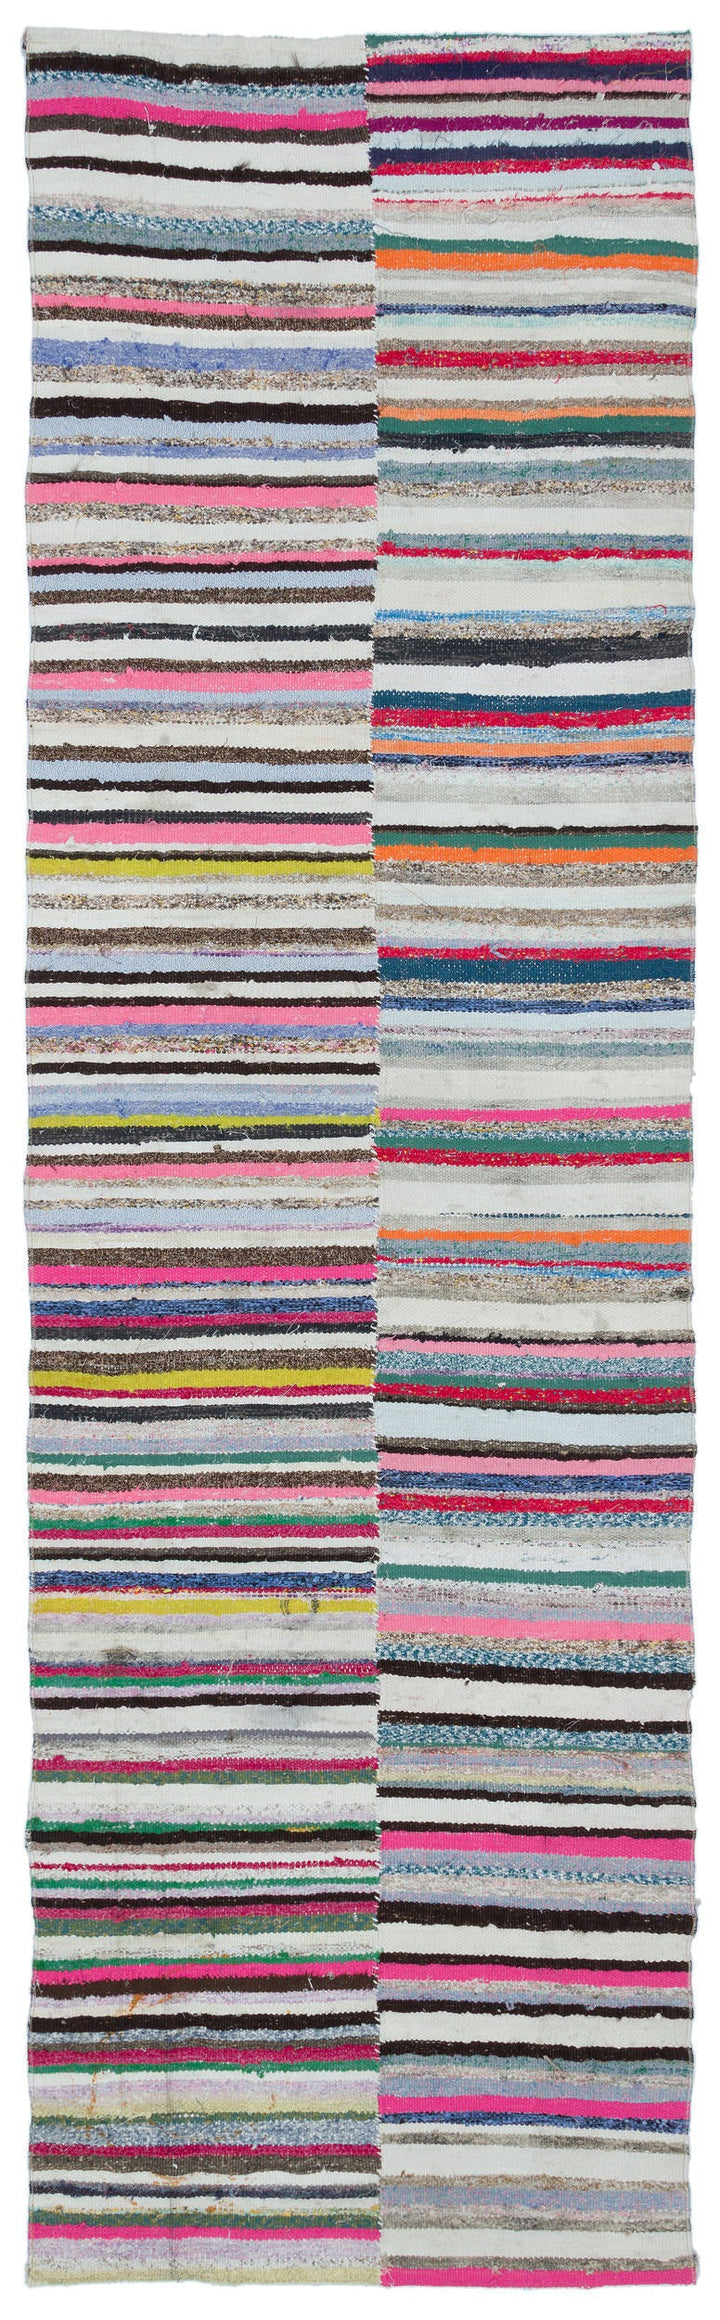 Cretan Beige Striped Wool Hand-Woven Carpet 098 x 328